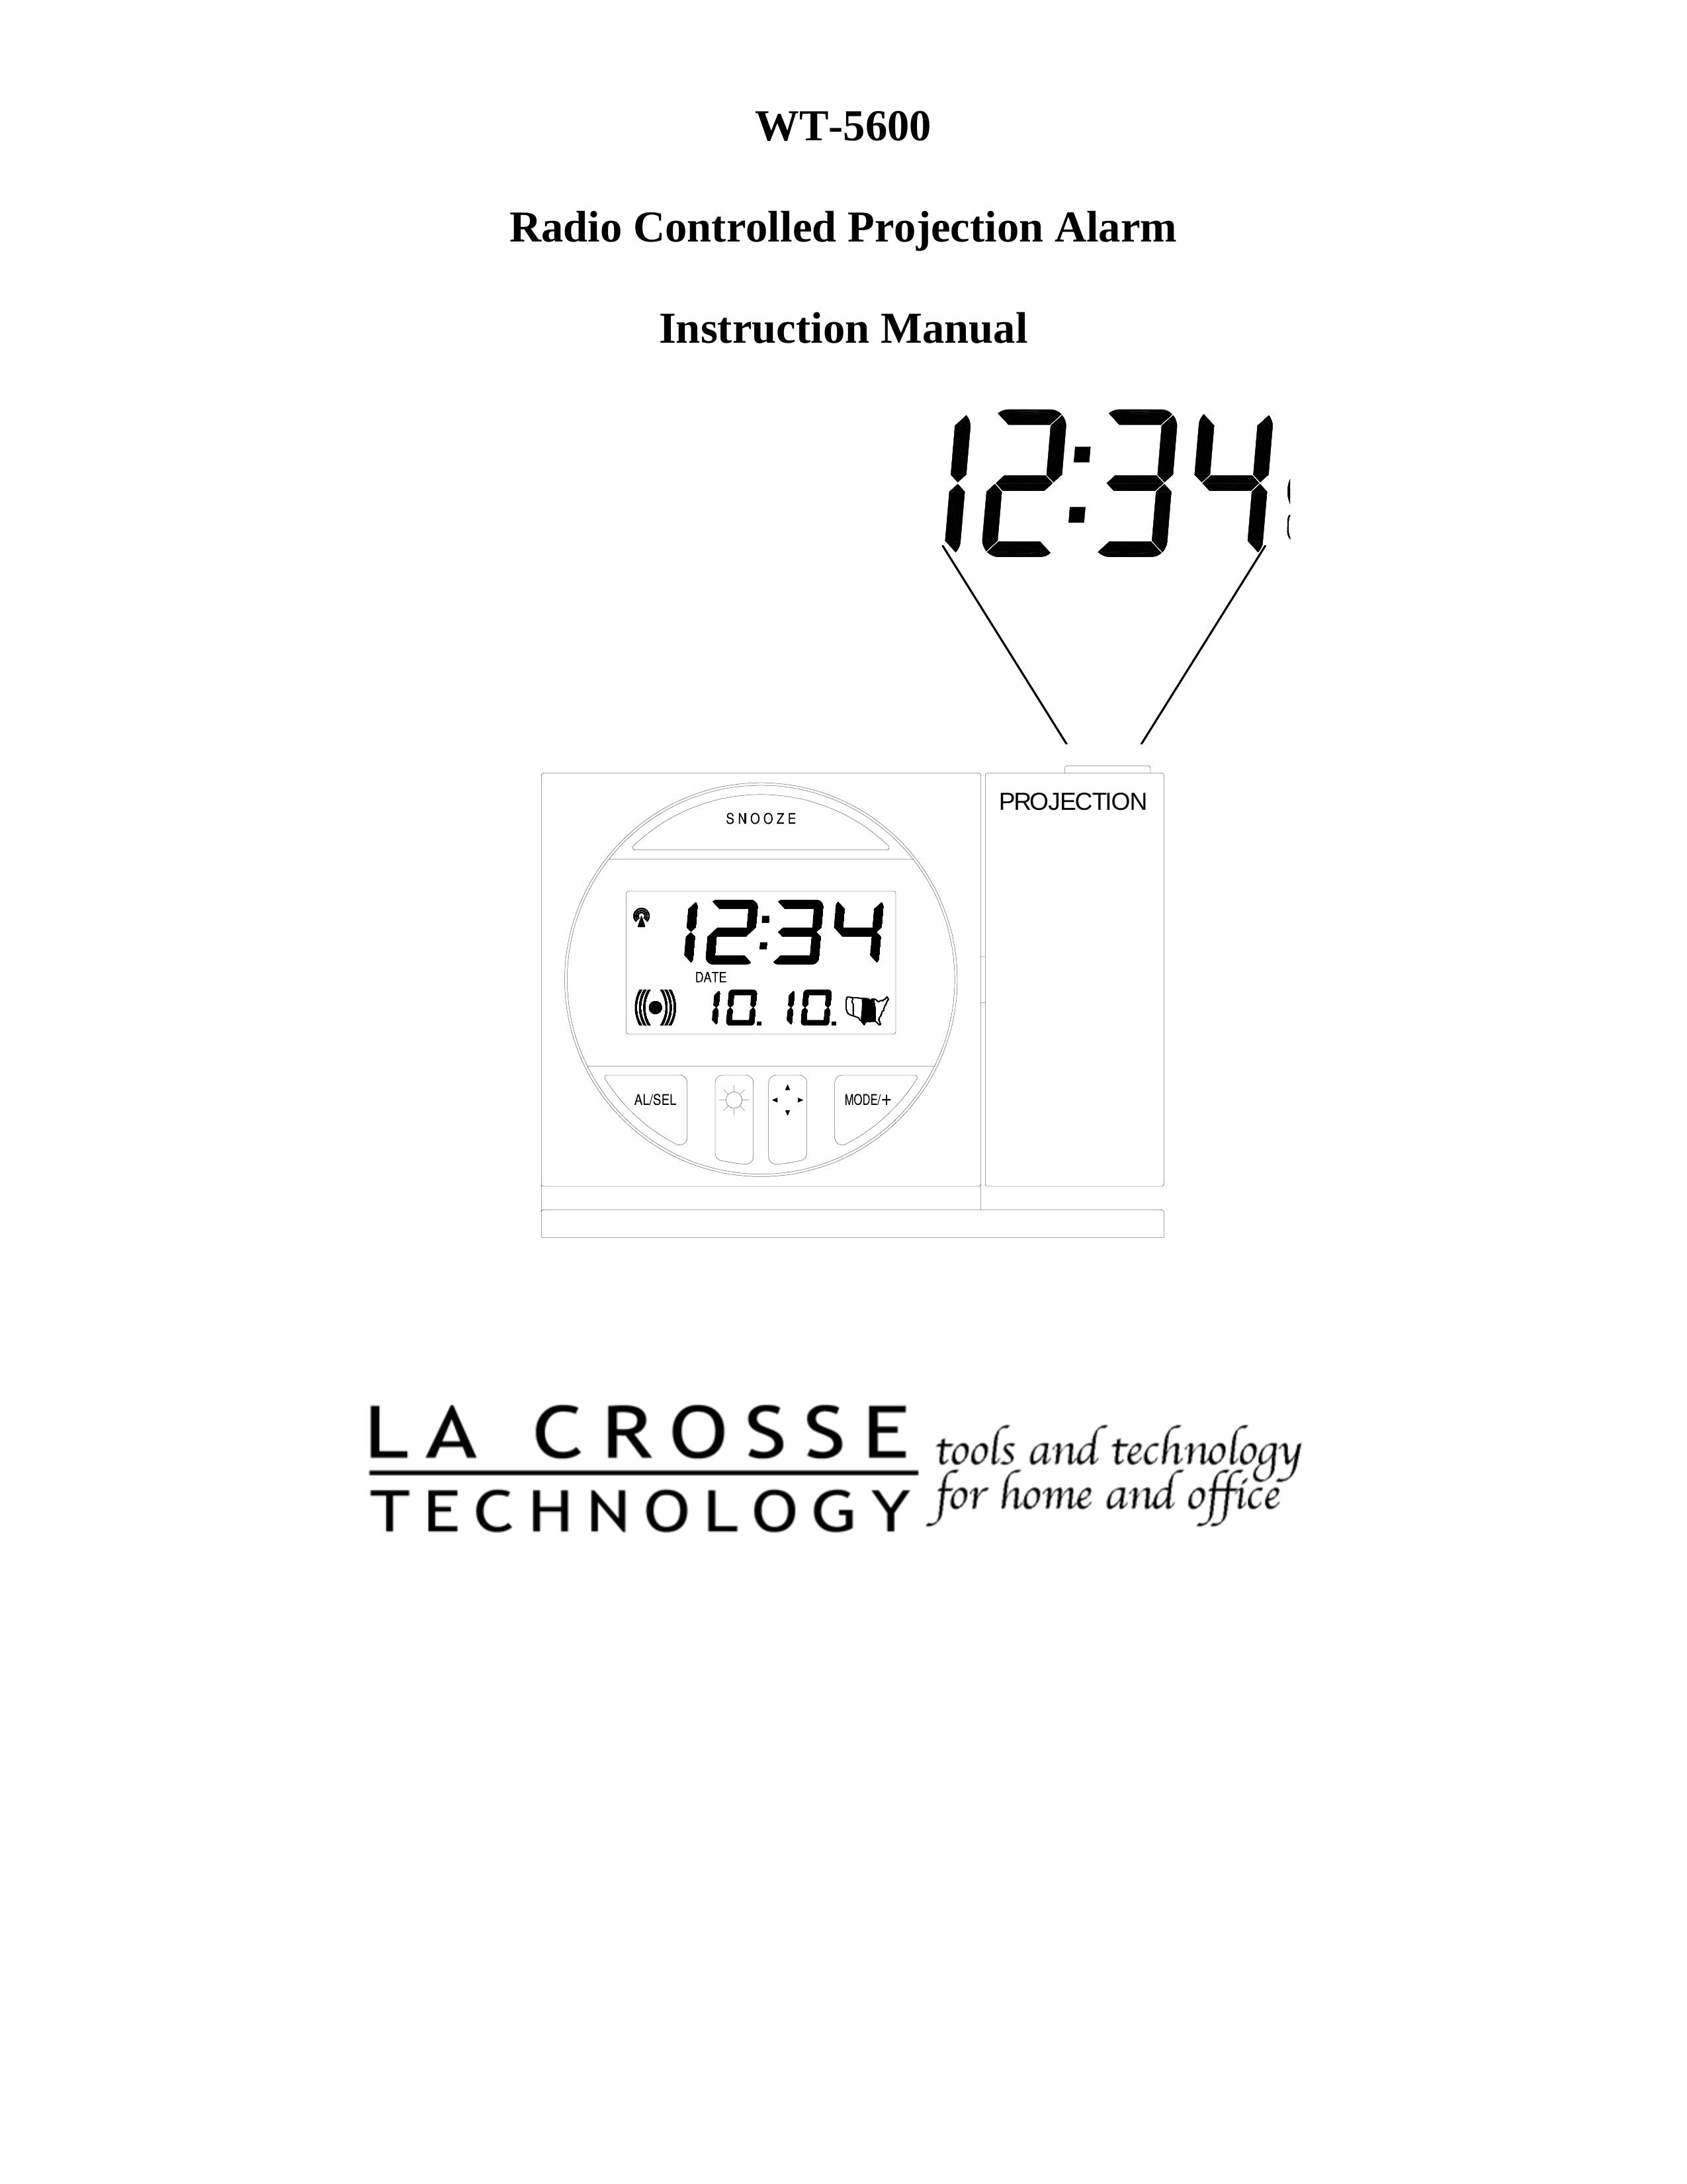 La Crosse Technology WT-5600 Clock Radio User Manual